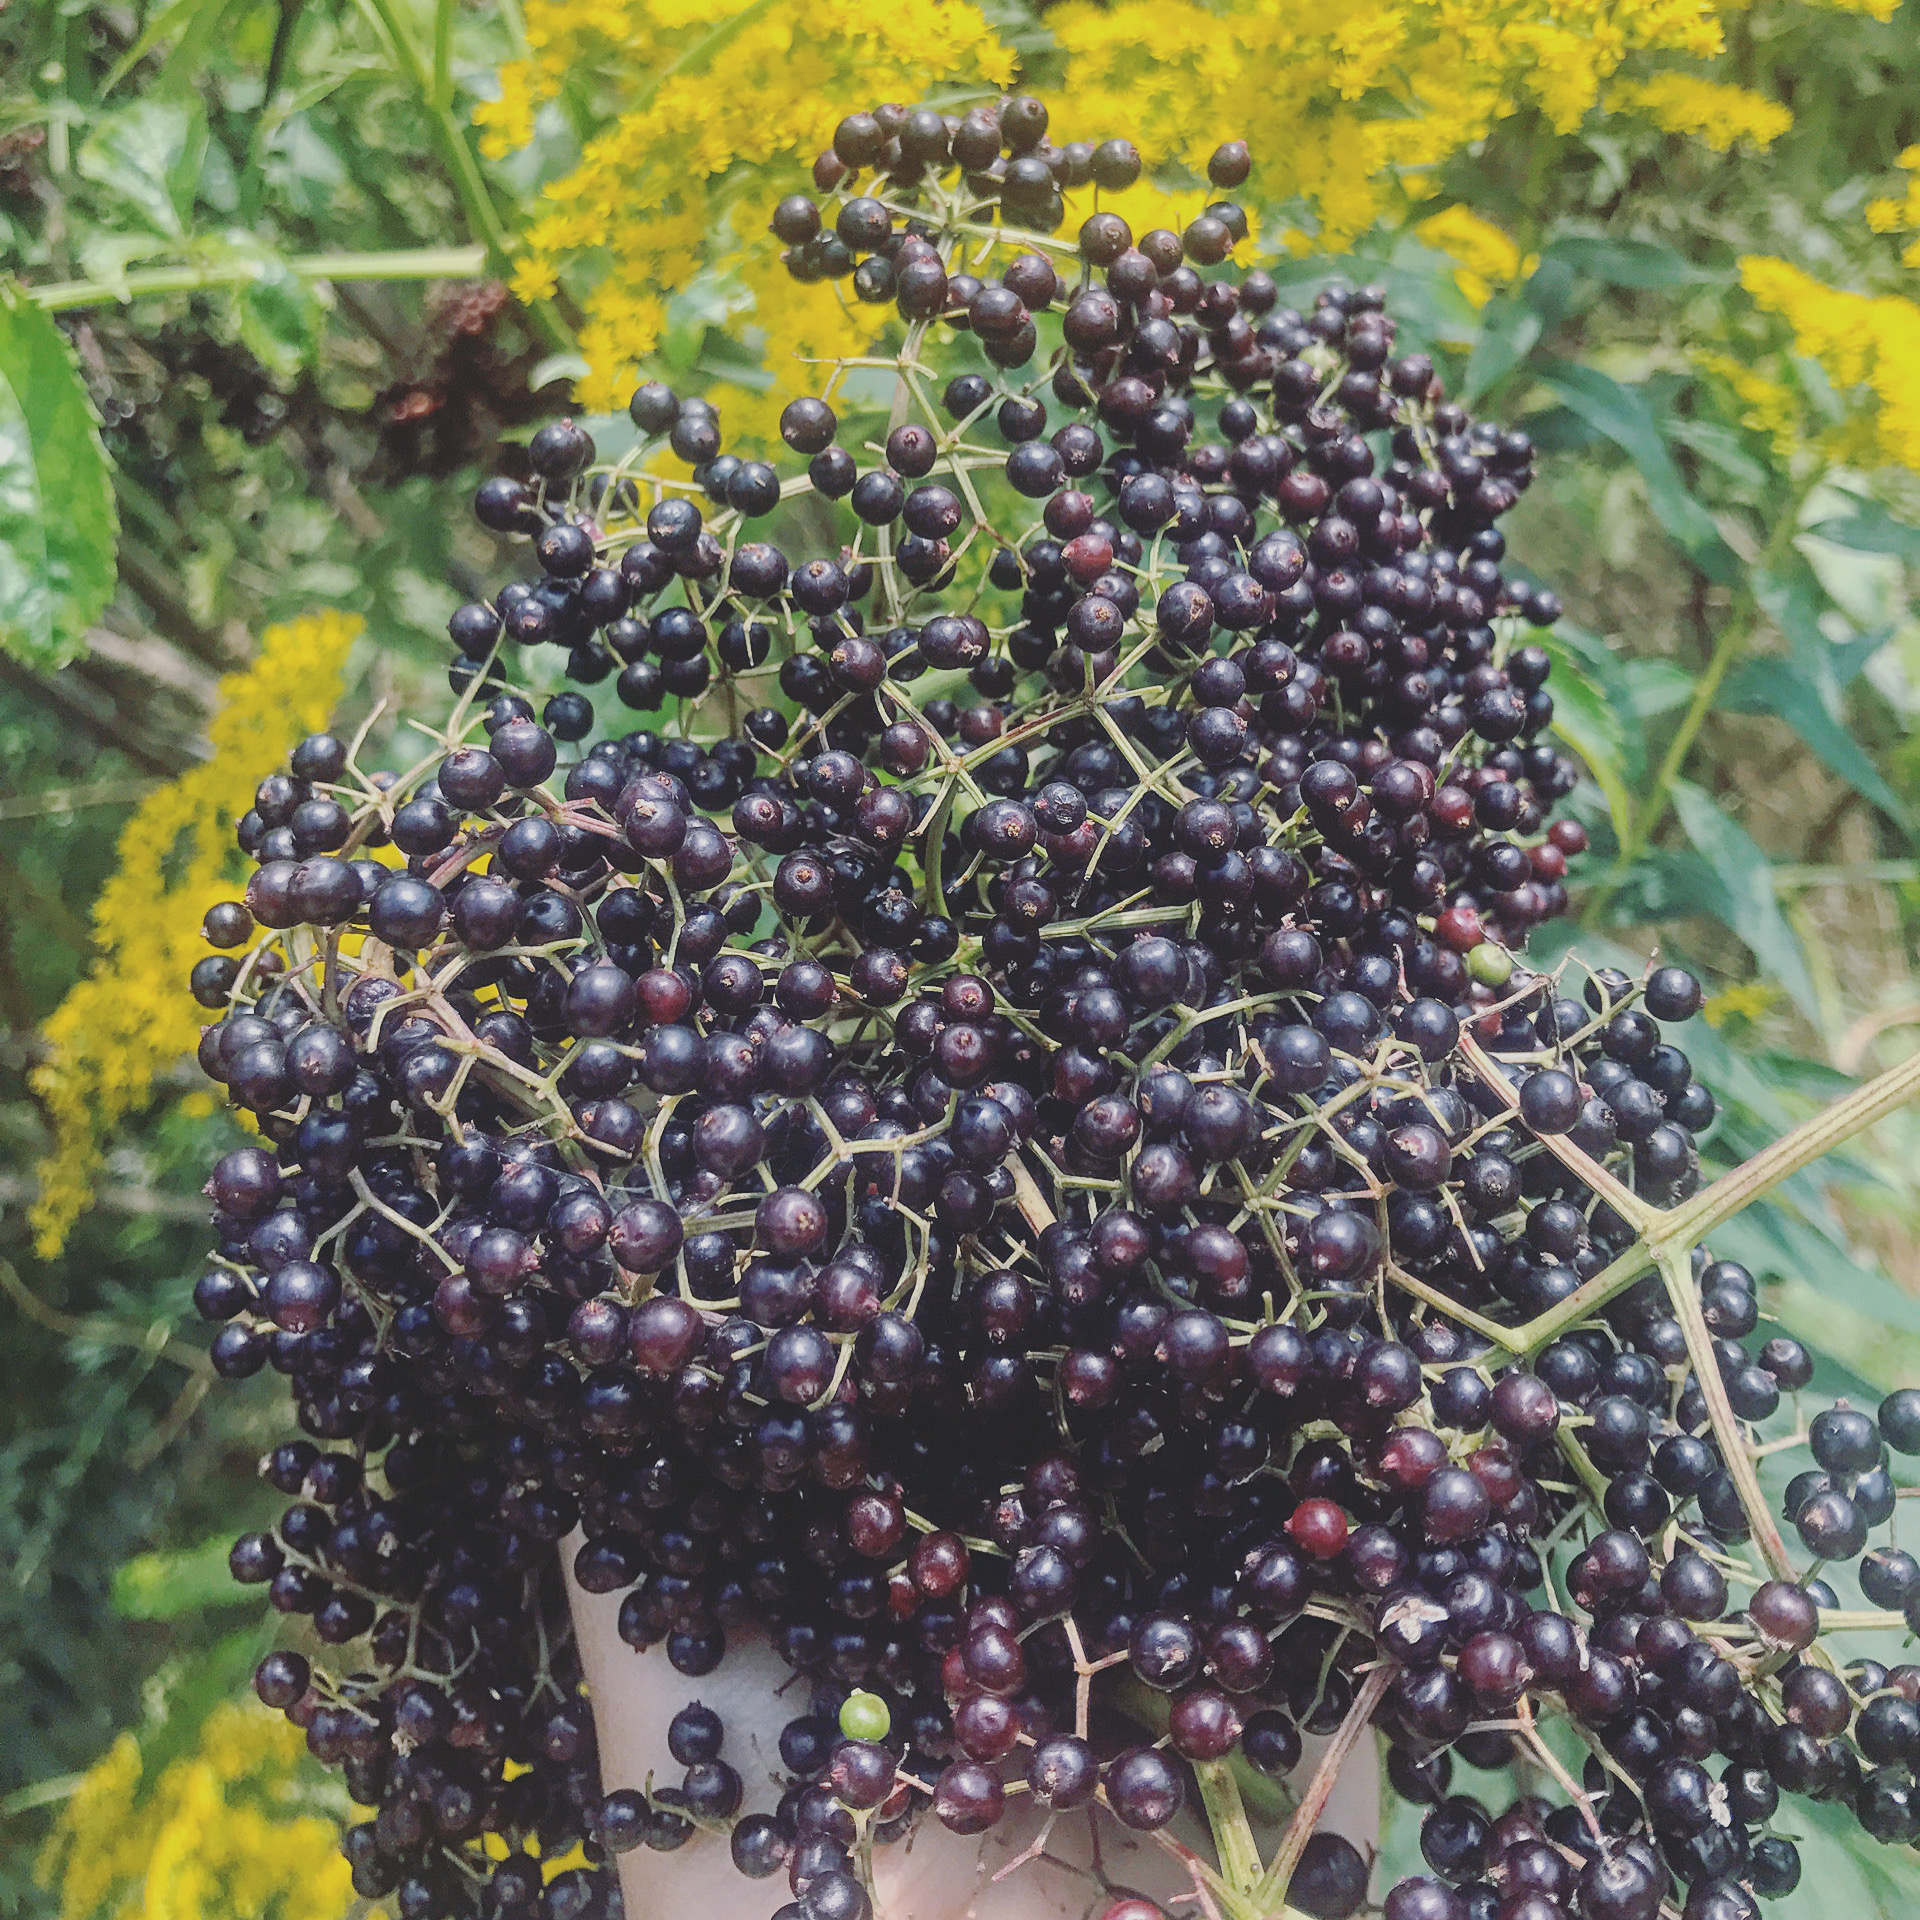 Elder berries for immune support and traditional benefits, elderberry tonic, elder flower tonic, elder flower syrup, natural immune support